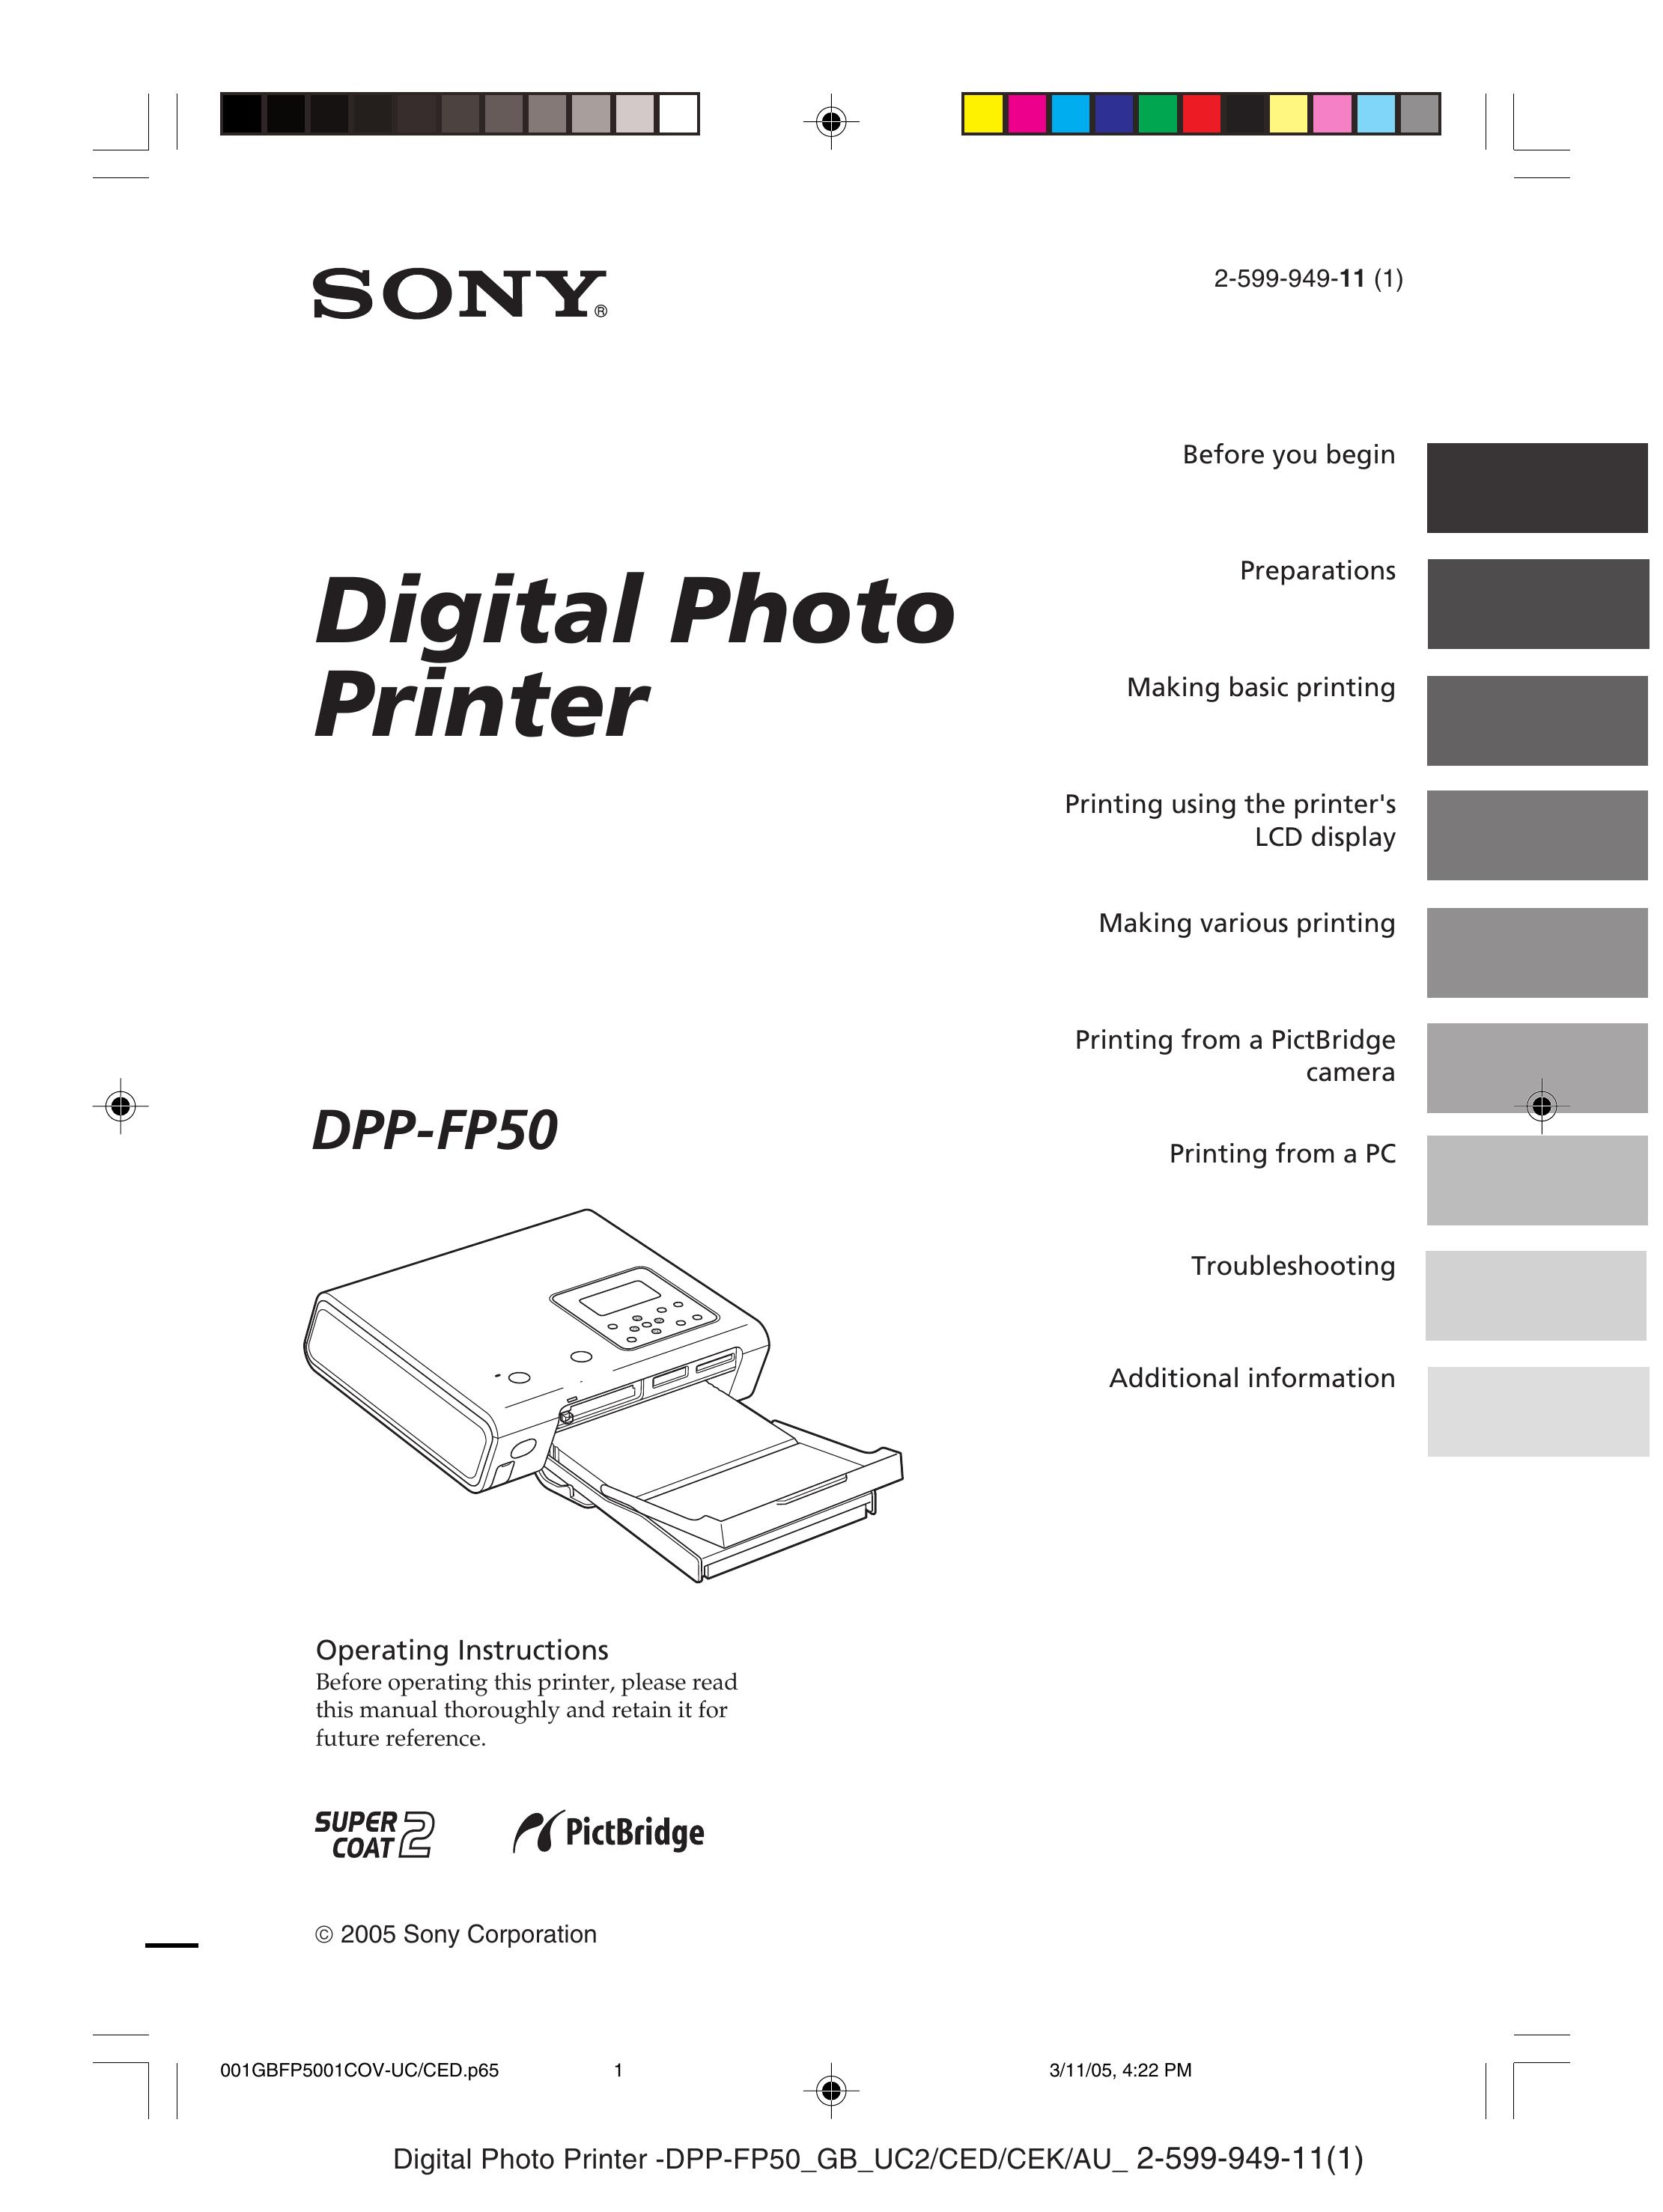 Sony DPP-FP50 Photo Printer User Manual